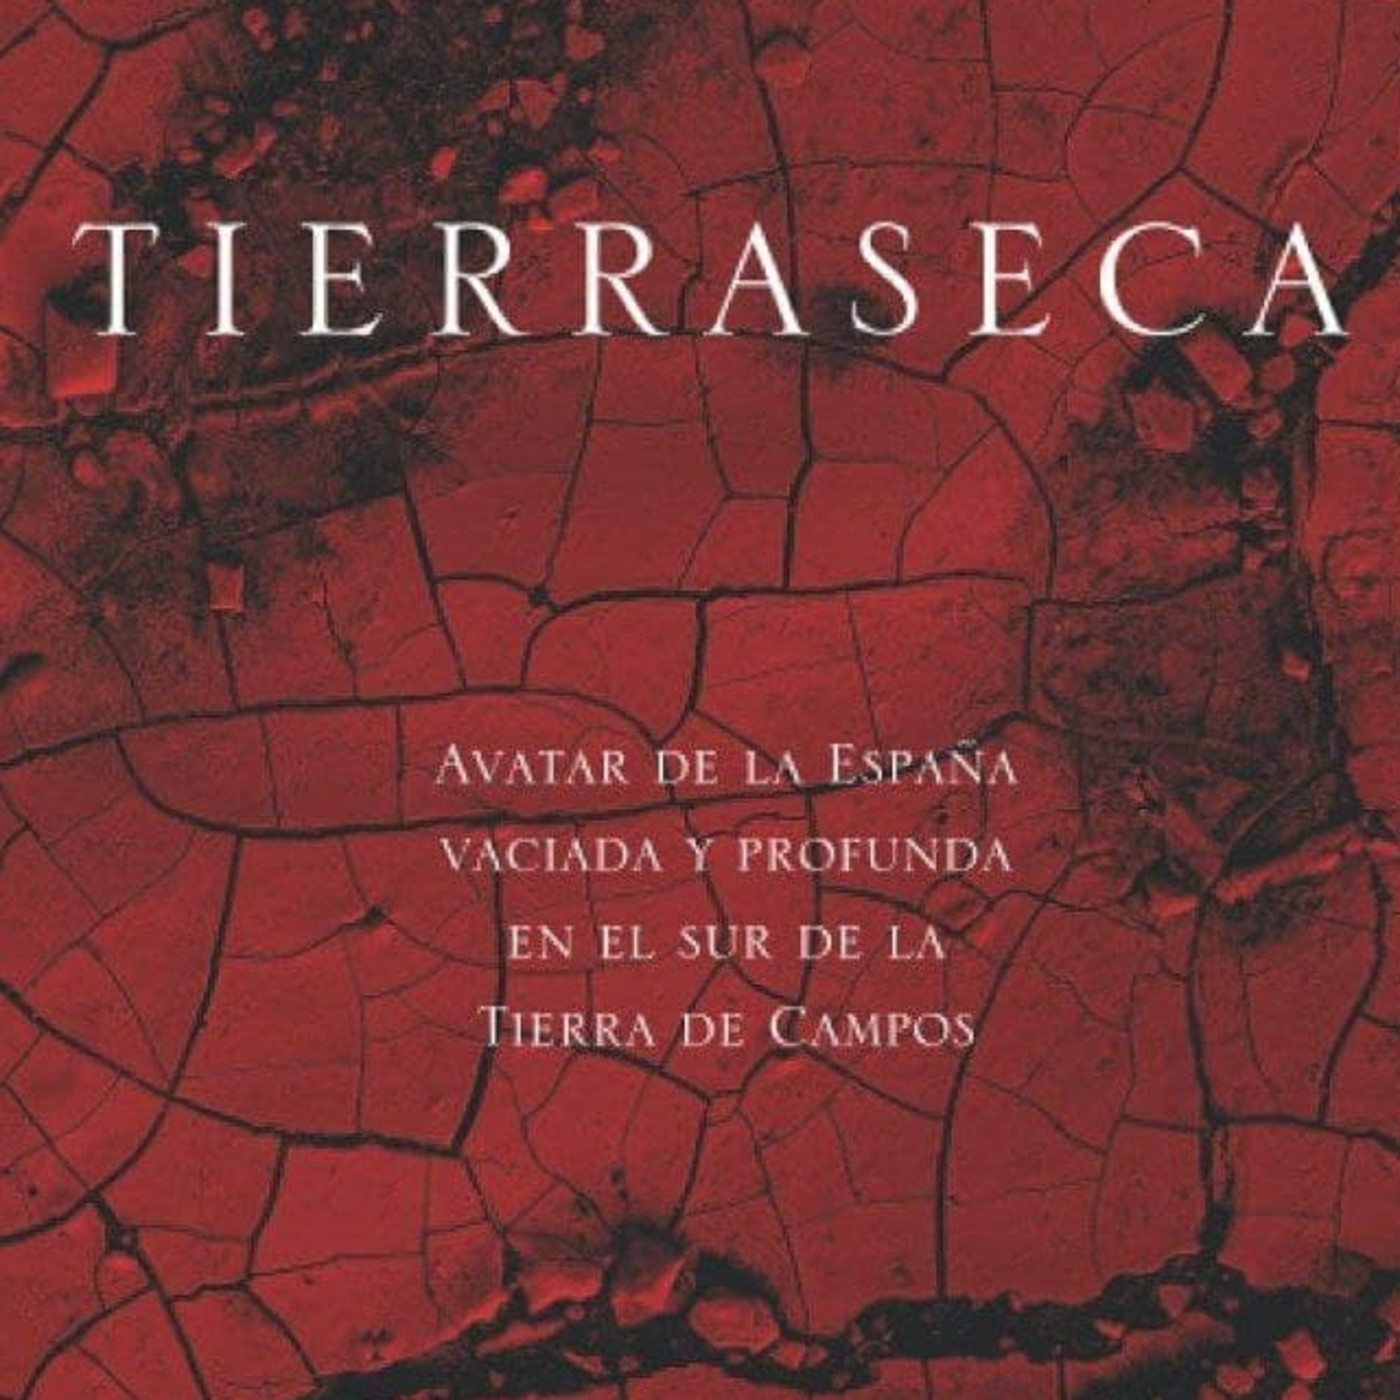 Audiolibros 2021 - TIERRASECA (Angel Toranzo)